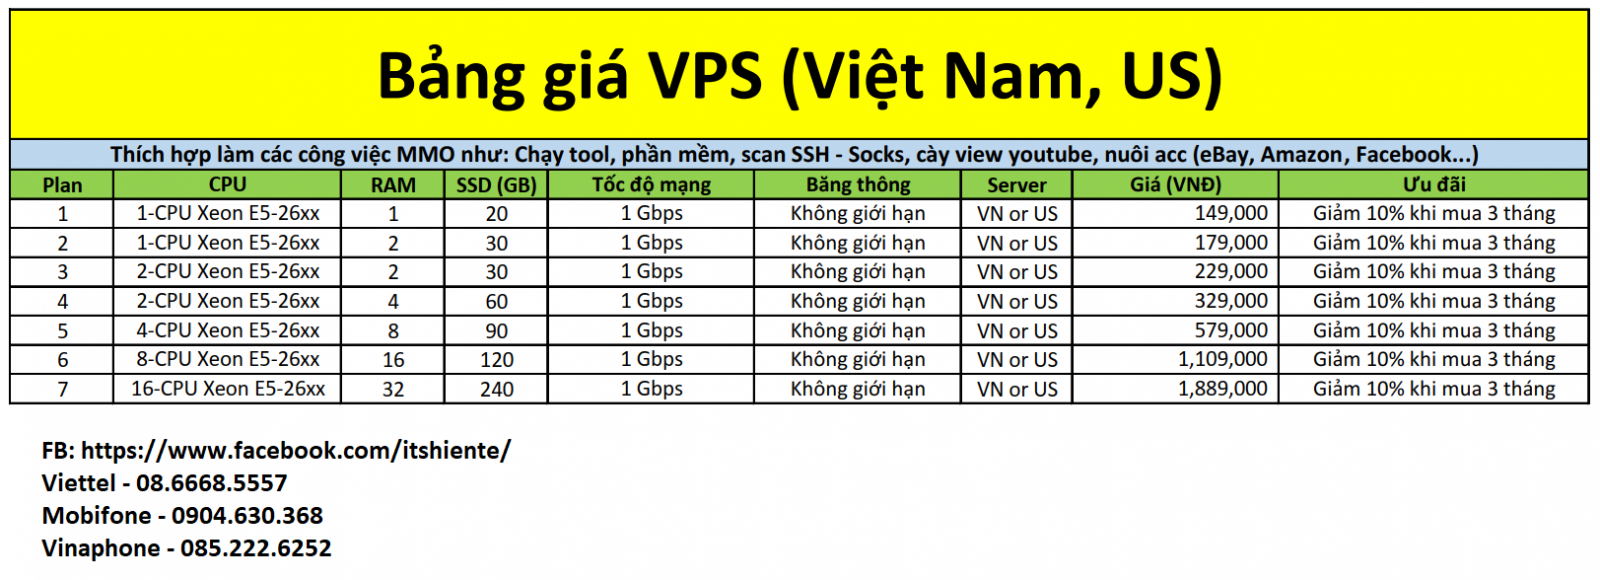 Bảng giá VPS VN, US.png